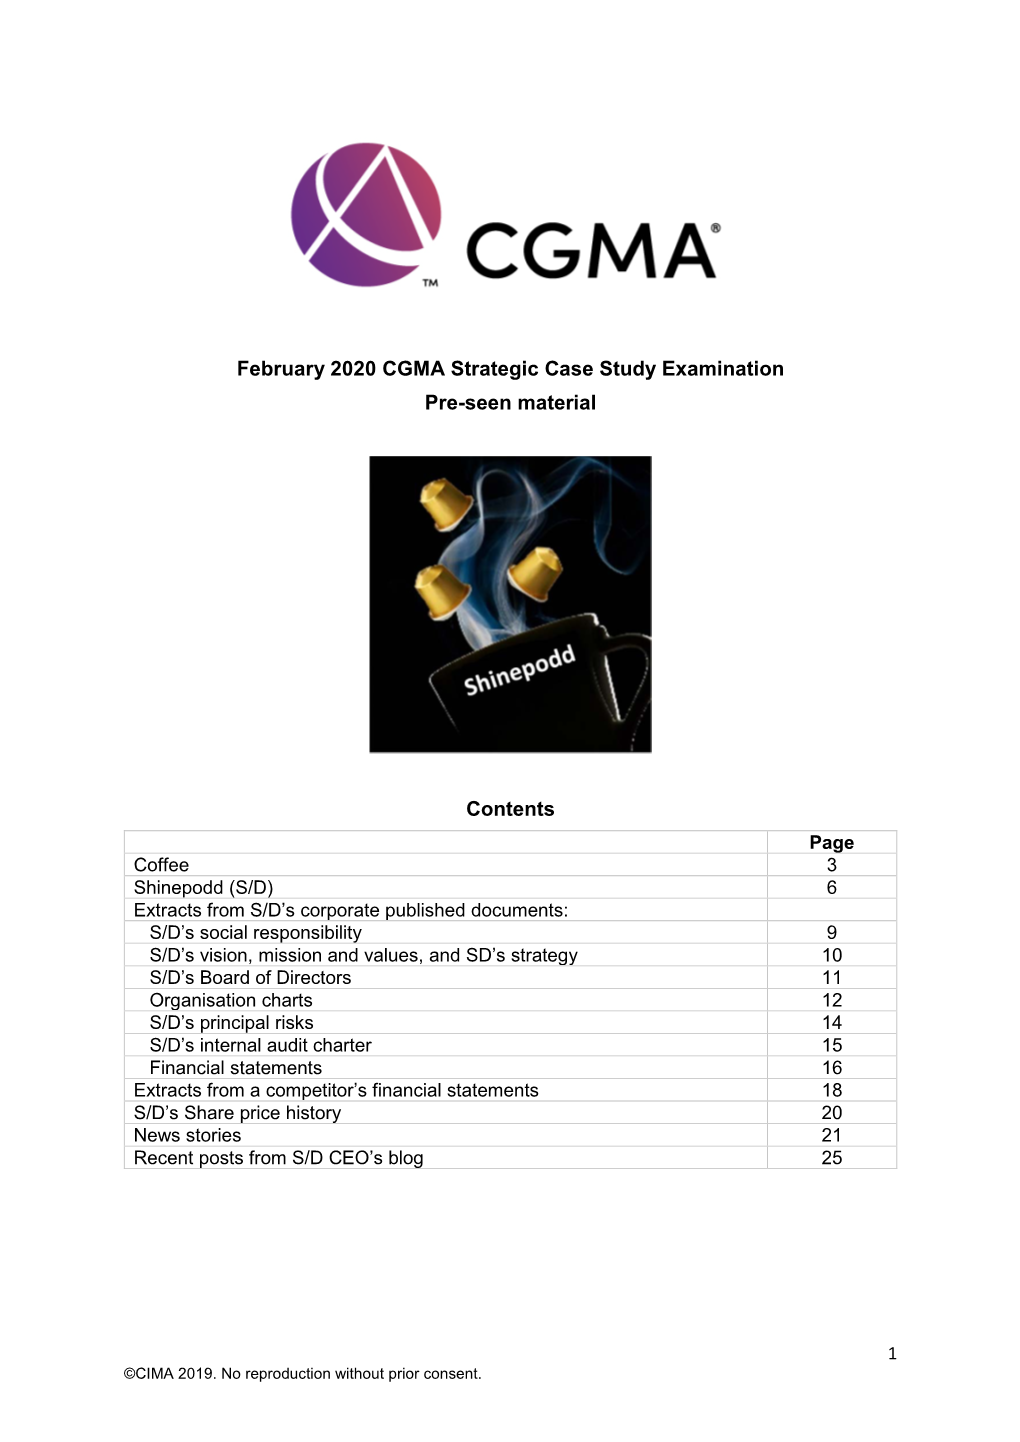 CGMA Strategic Case Study Examination Pre-Seen Material